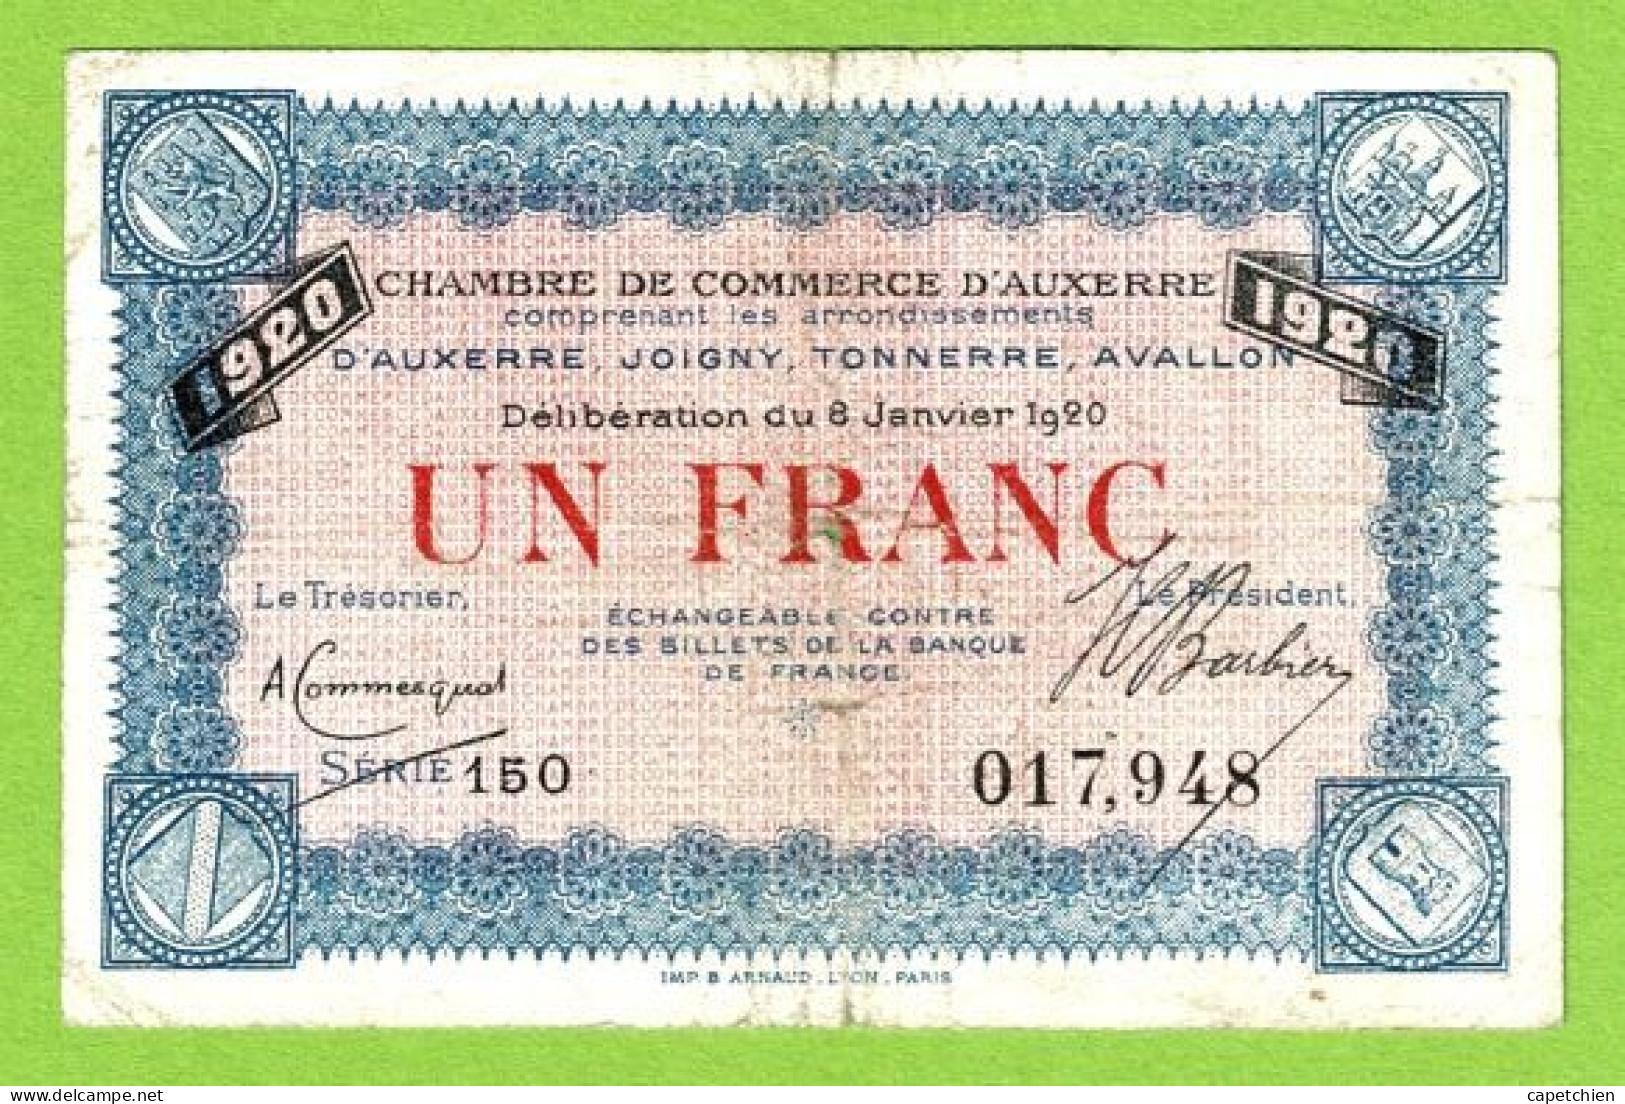 FRANCE / AUXERRE / 1 FRANC / 8 Janvier 1920 / N° 017948 / SERIE  150 - Handelskammer